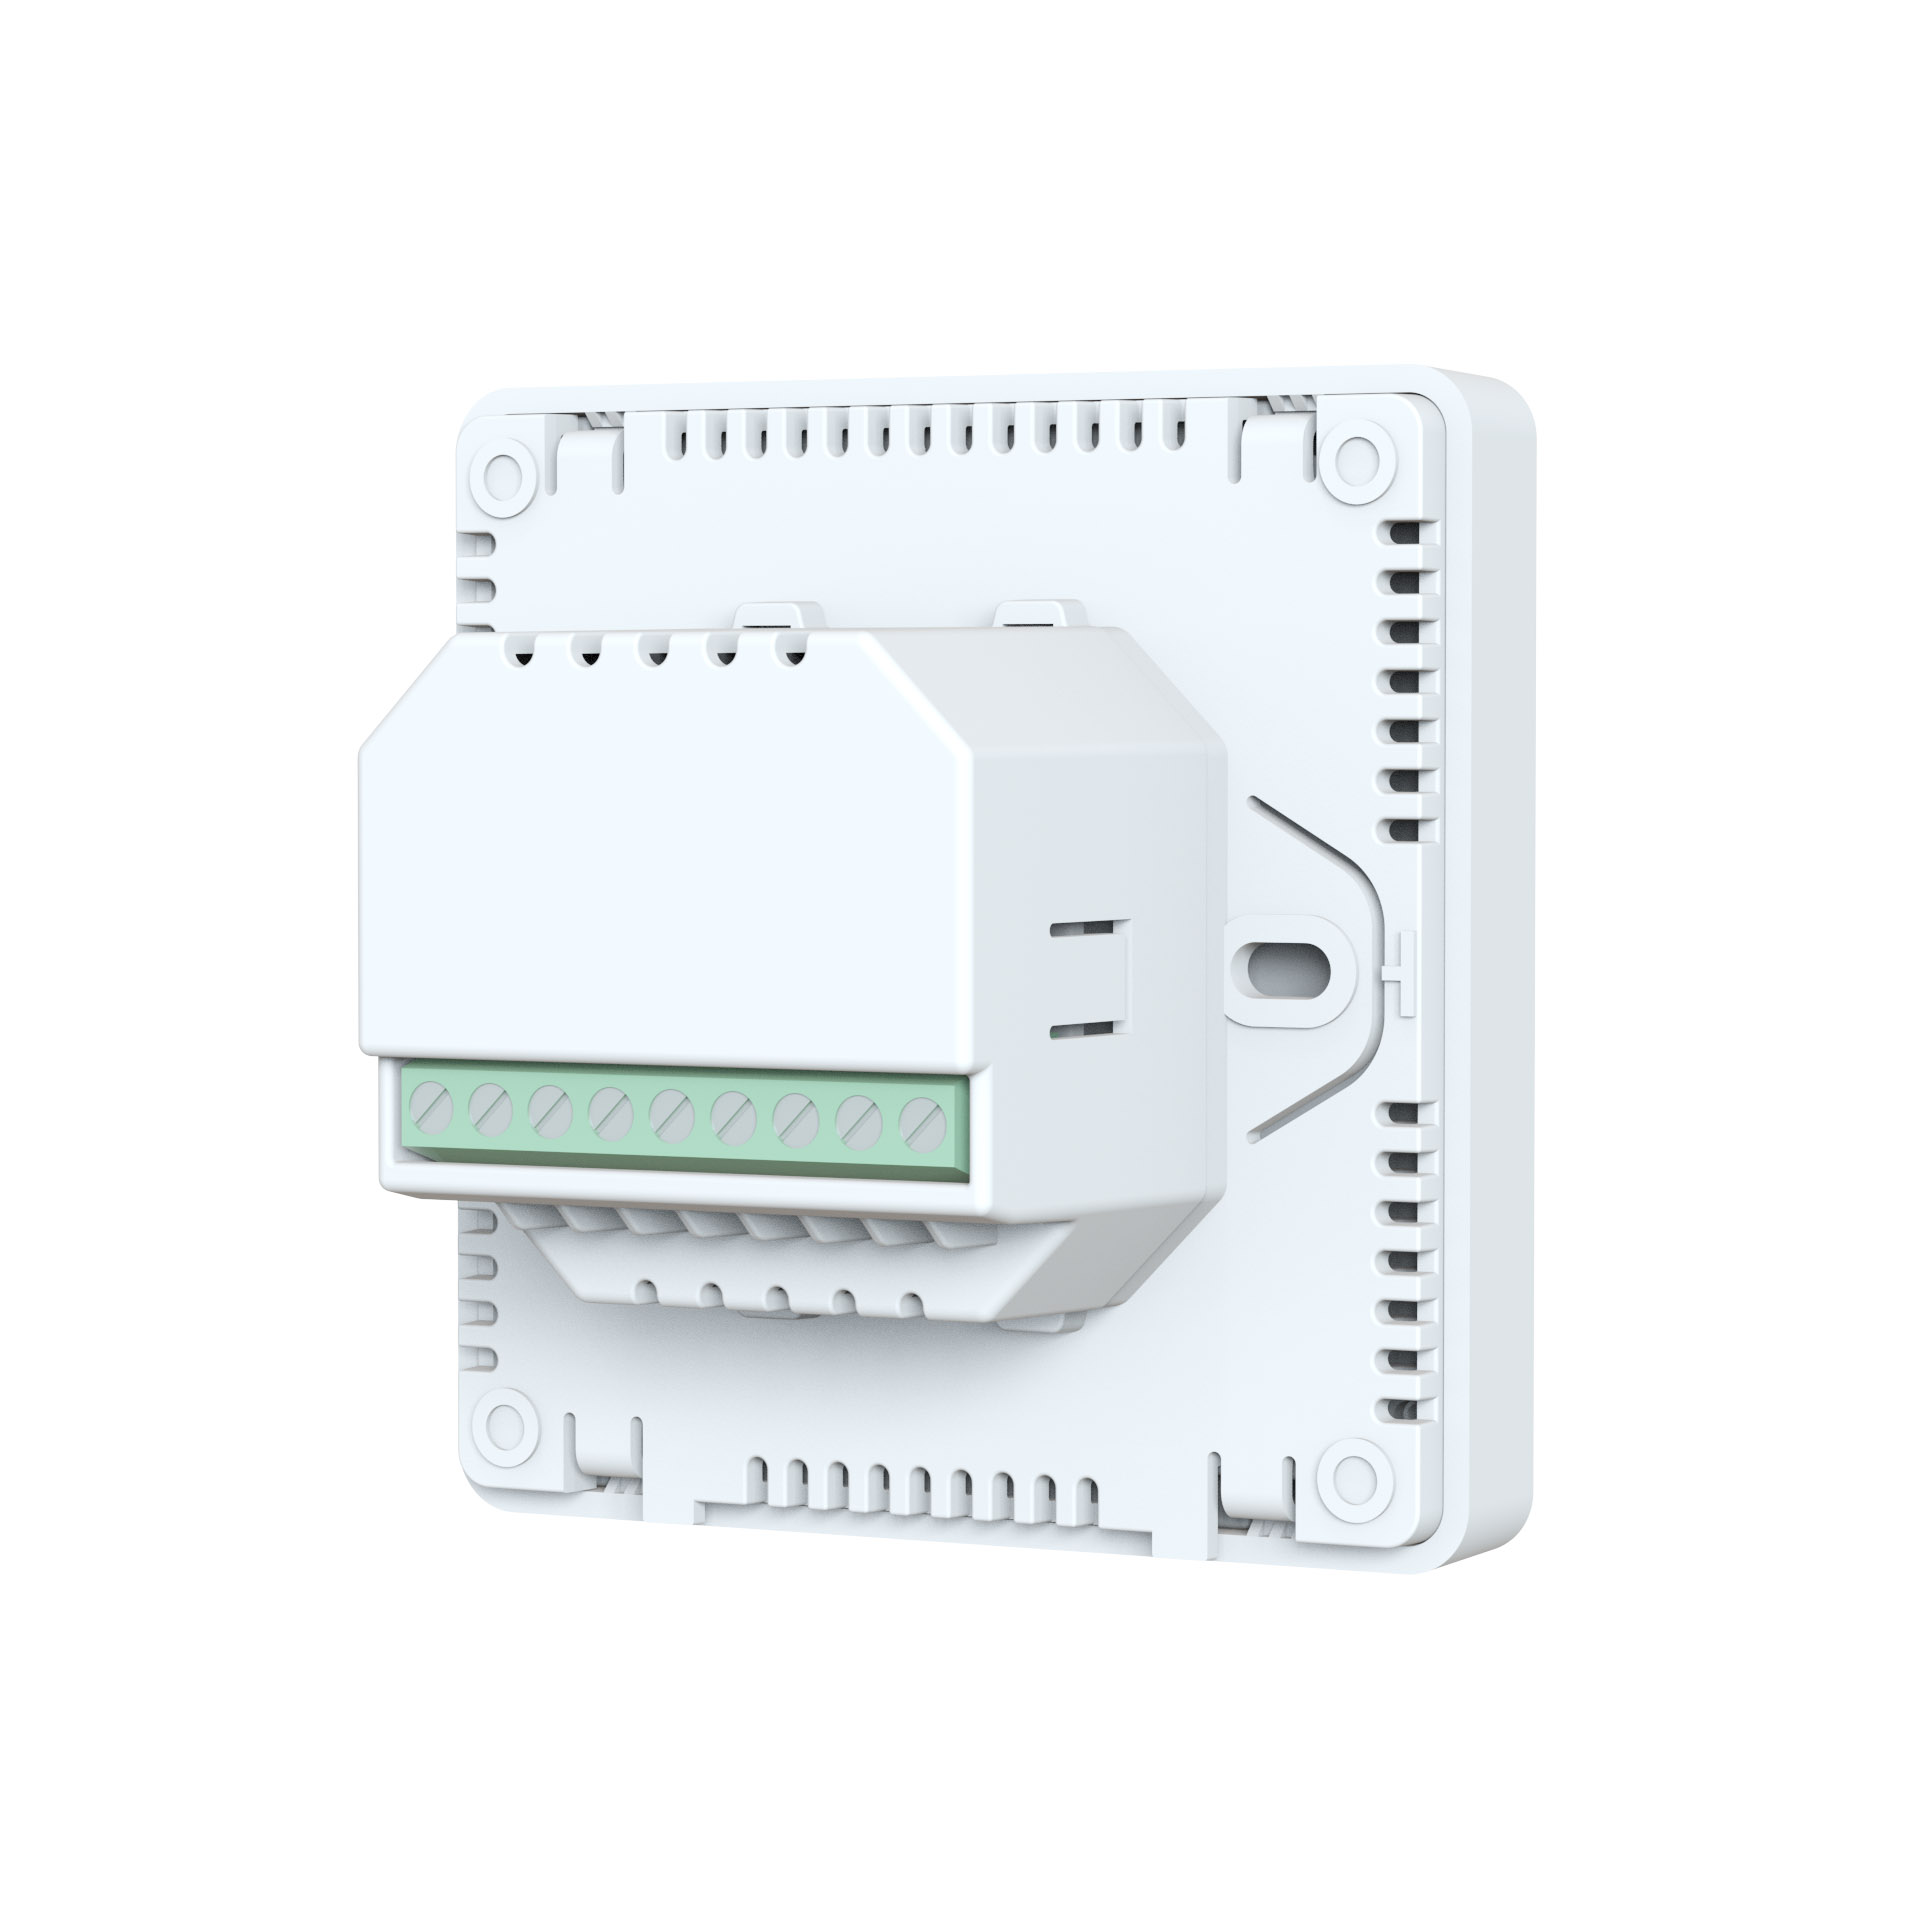 E-top new arrival EC fan coil HVAC thermostat with RS485 modbus, keycard, external sensor